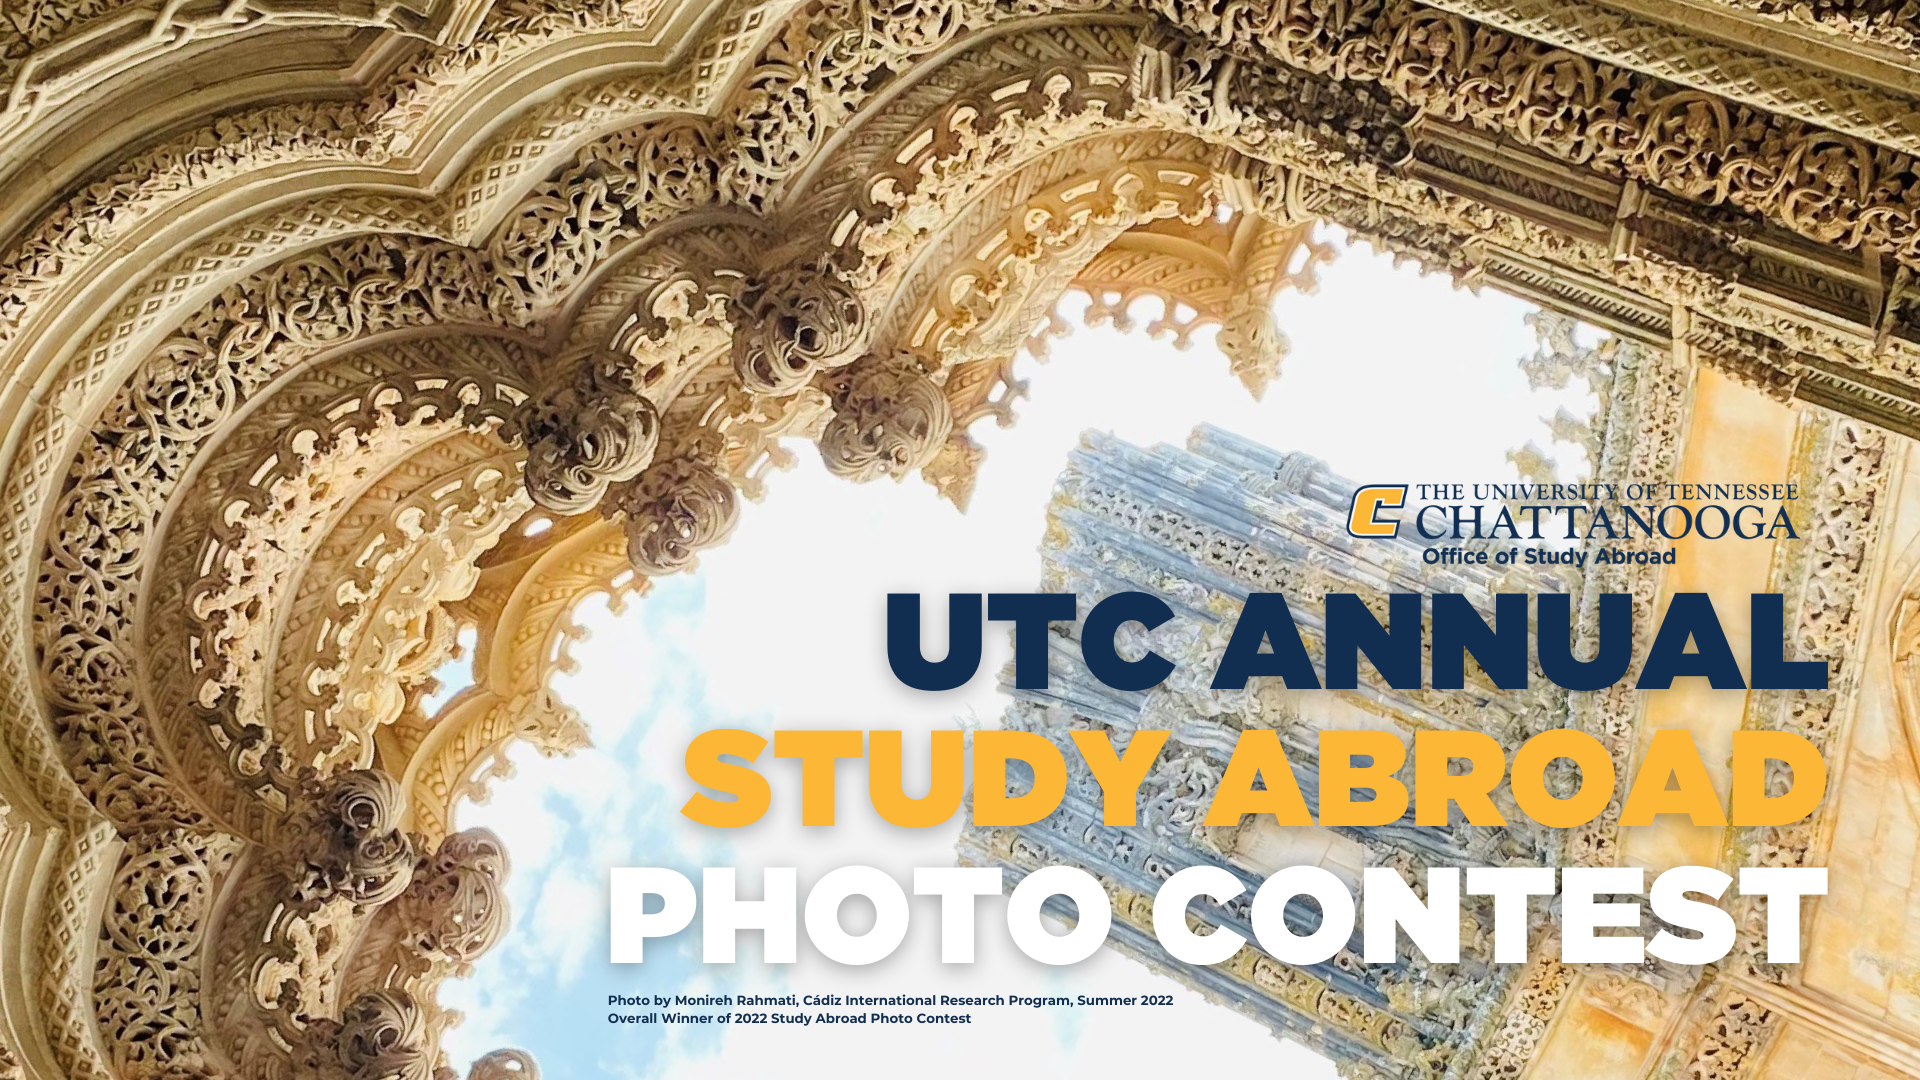 Annual Study Abroad Photo Contest